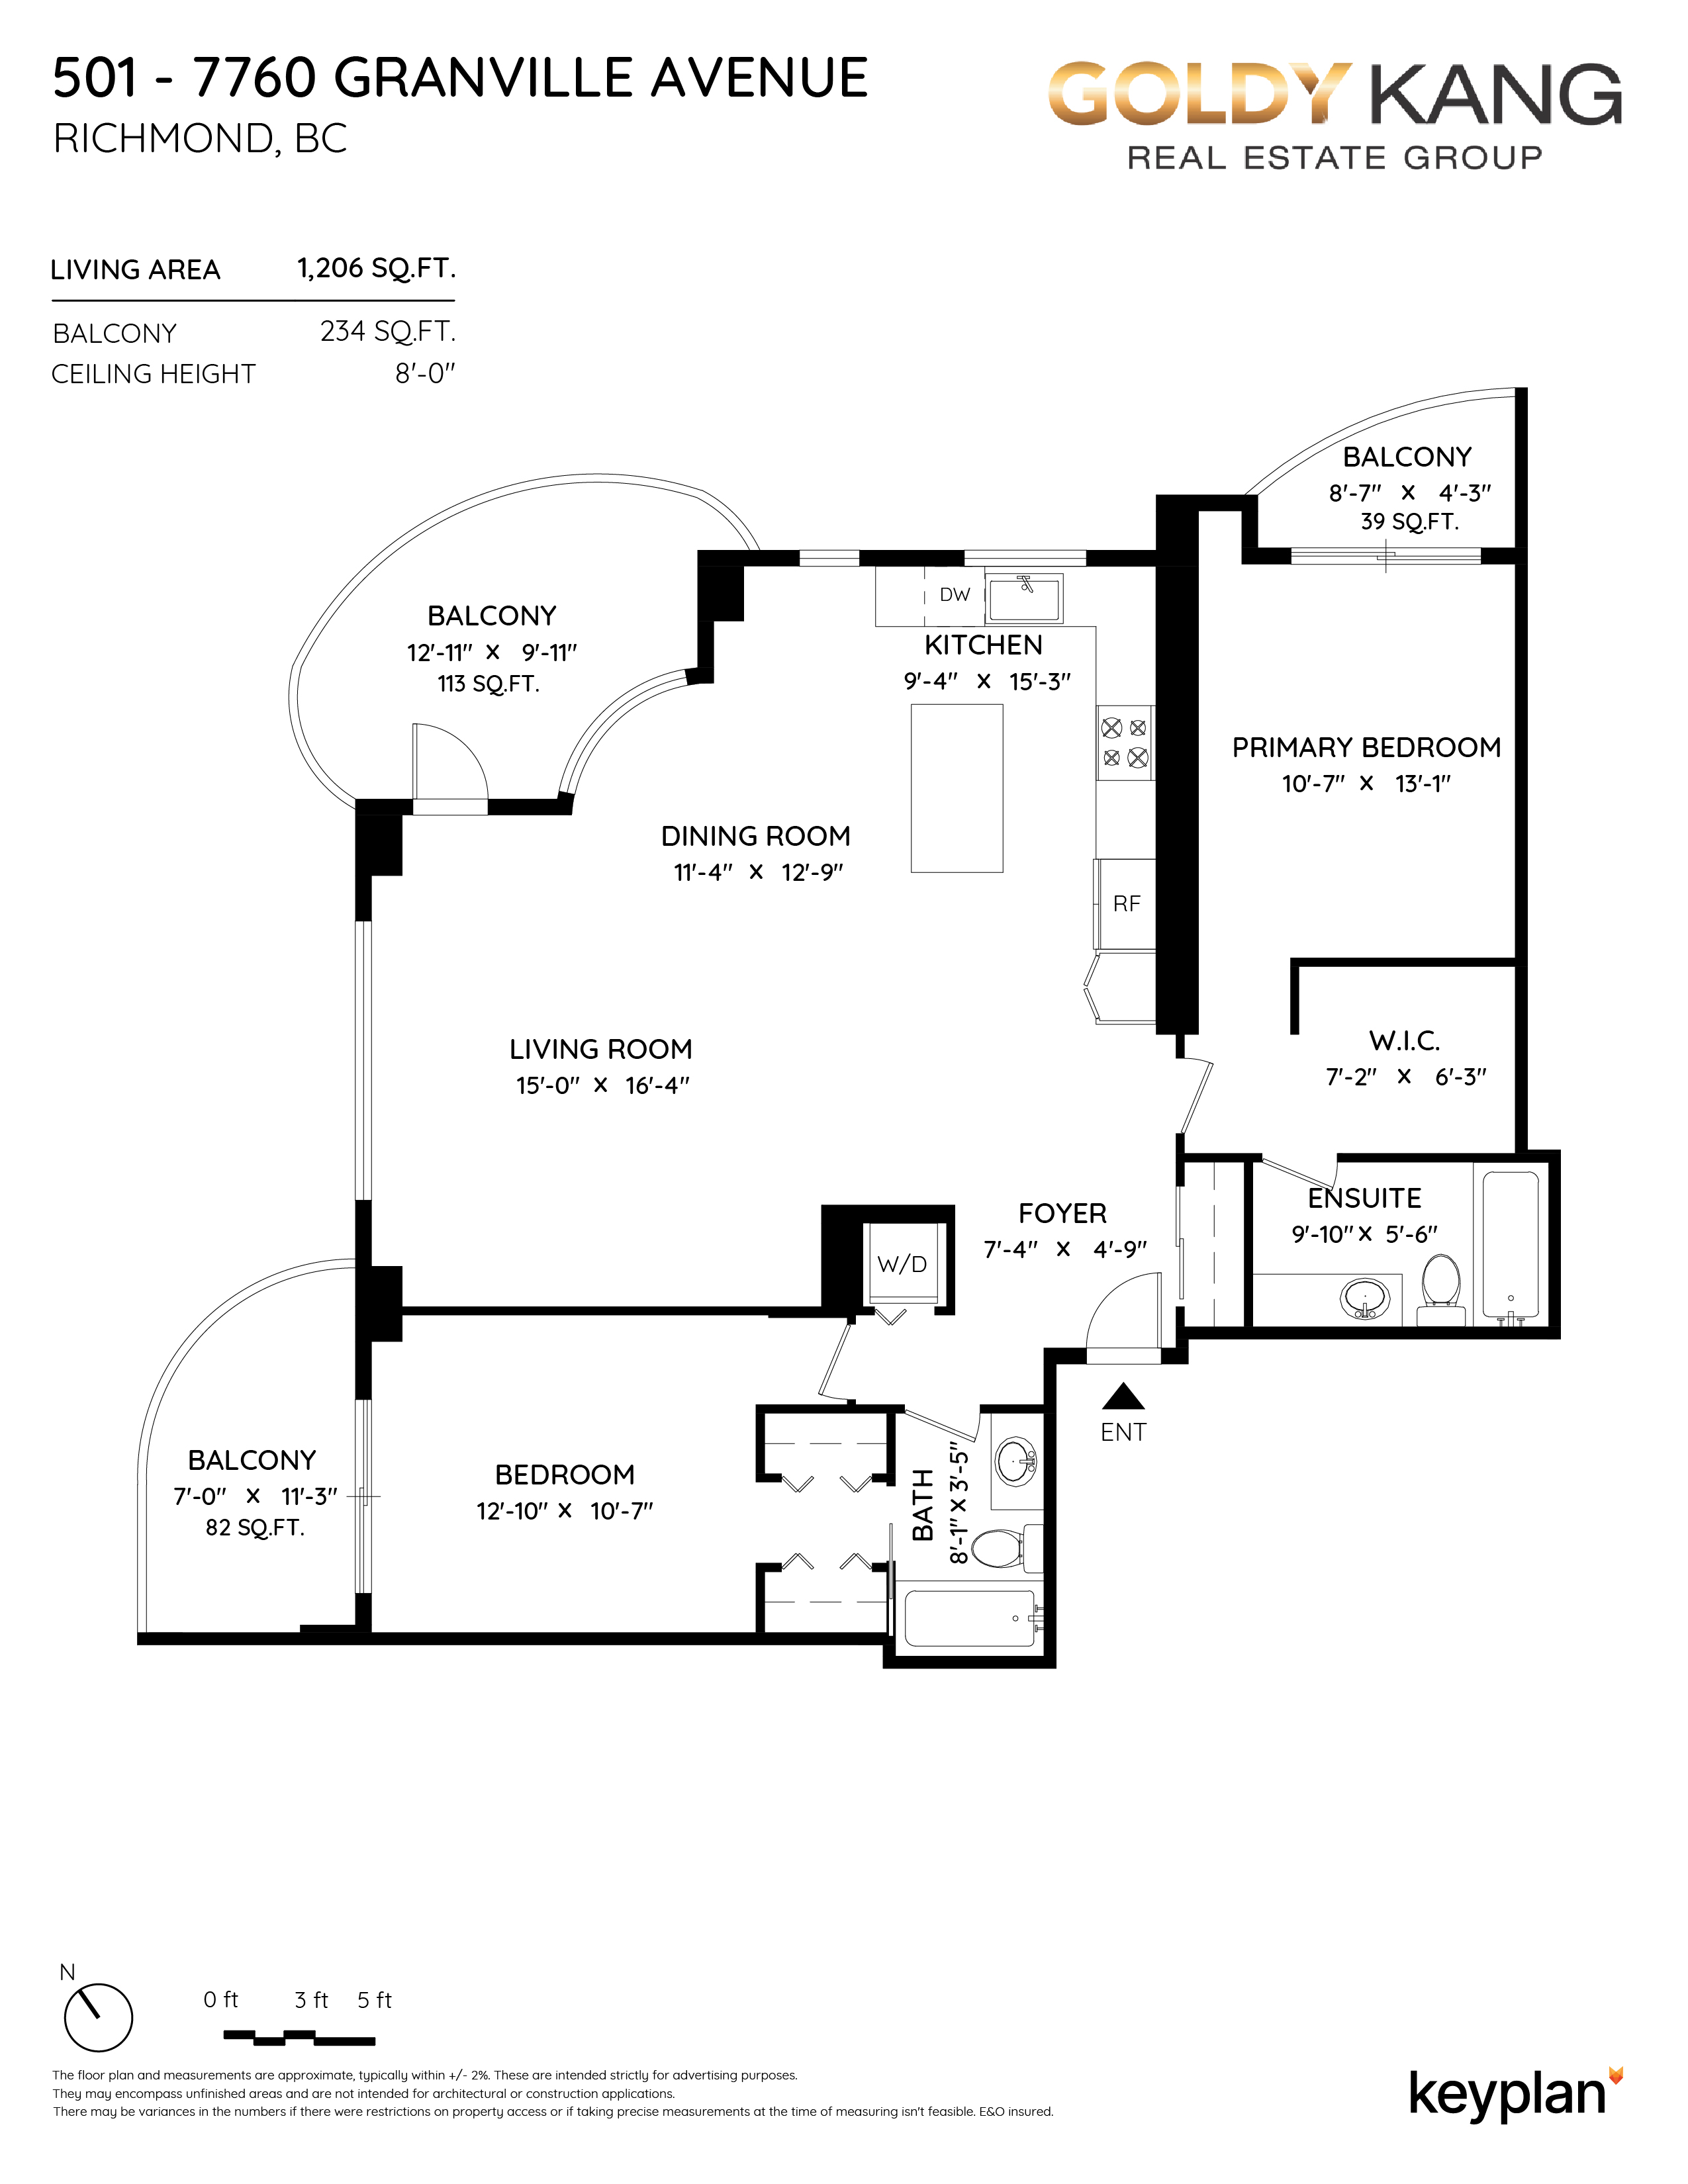 Goldy Kang - Unit 501 - 7760 Granville Avenue, Richmond, BC, V6Y 4B9 Canada | Floor Plan 1